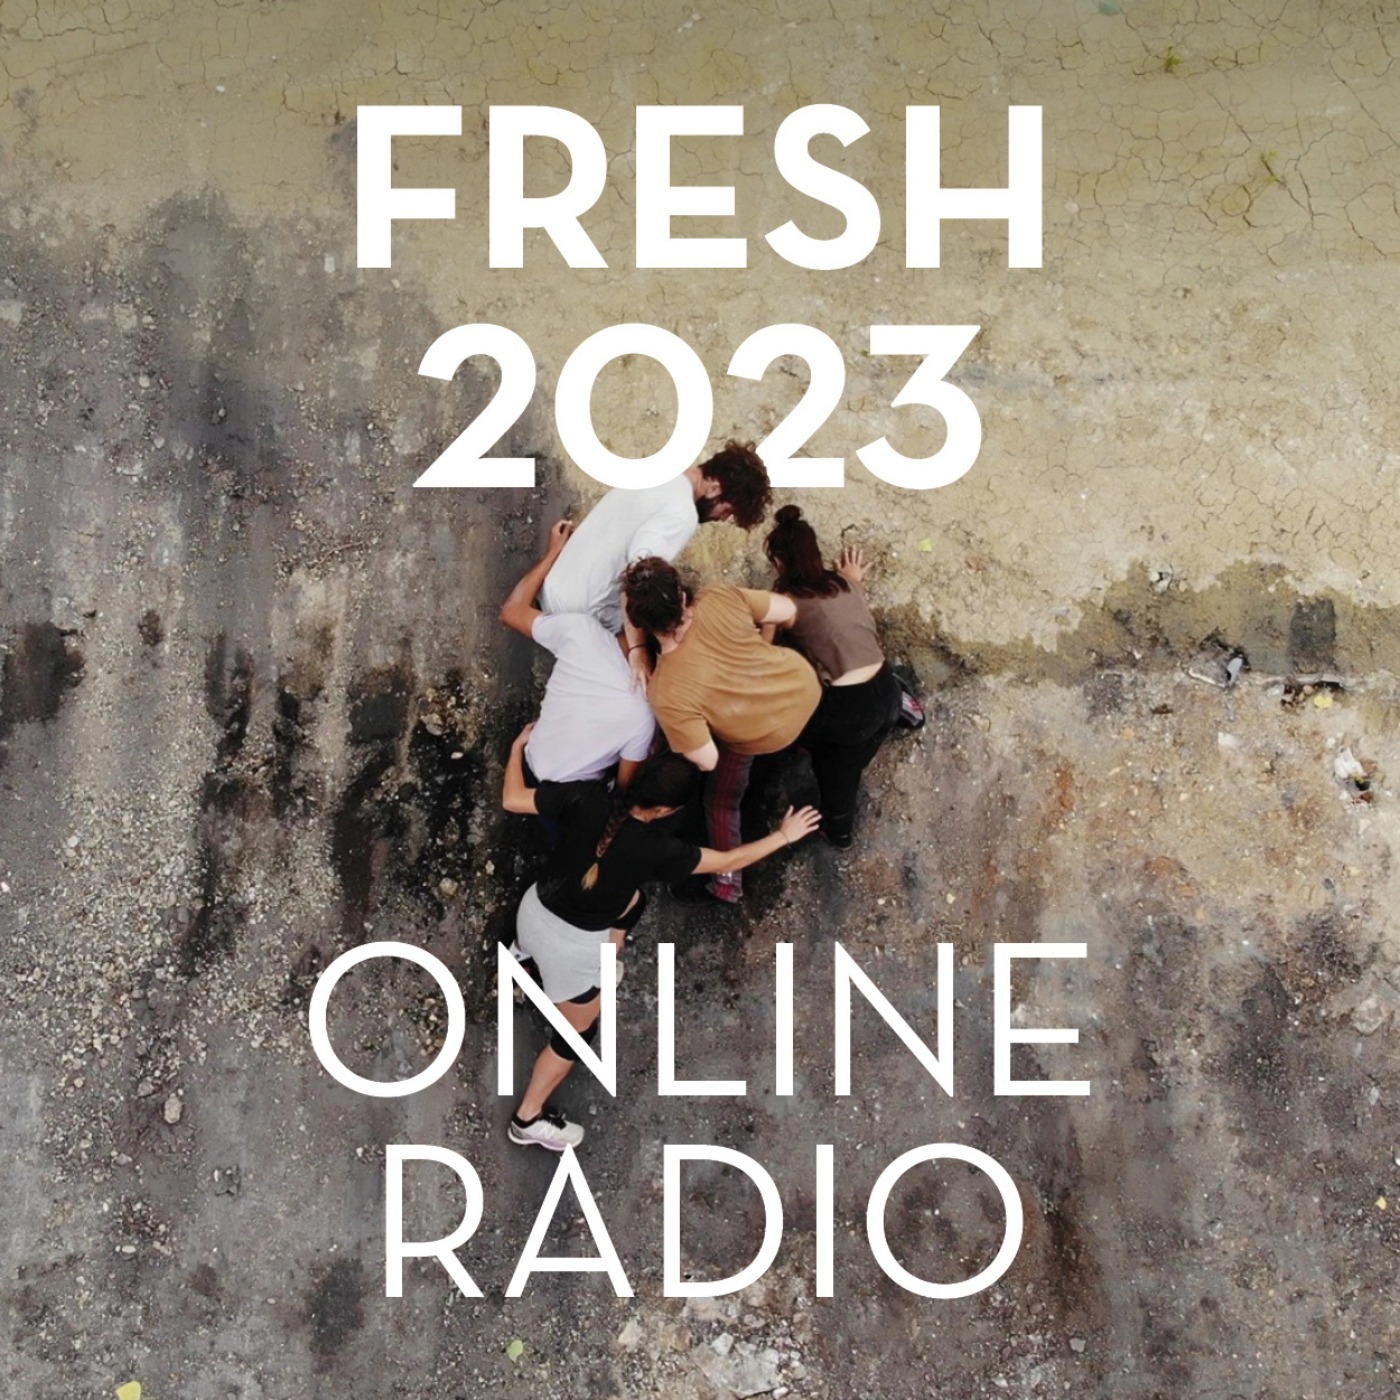 FRESH 2023 - ONLINE RADIO - ON SAFETY / Keynote and artistic talk